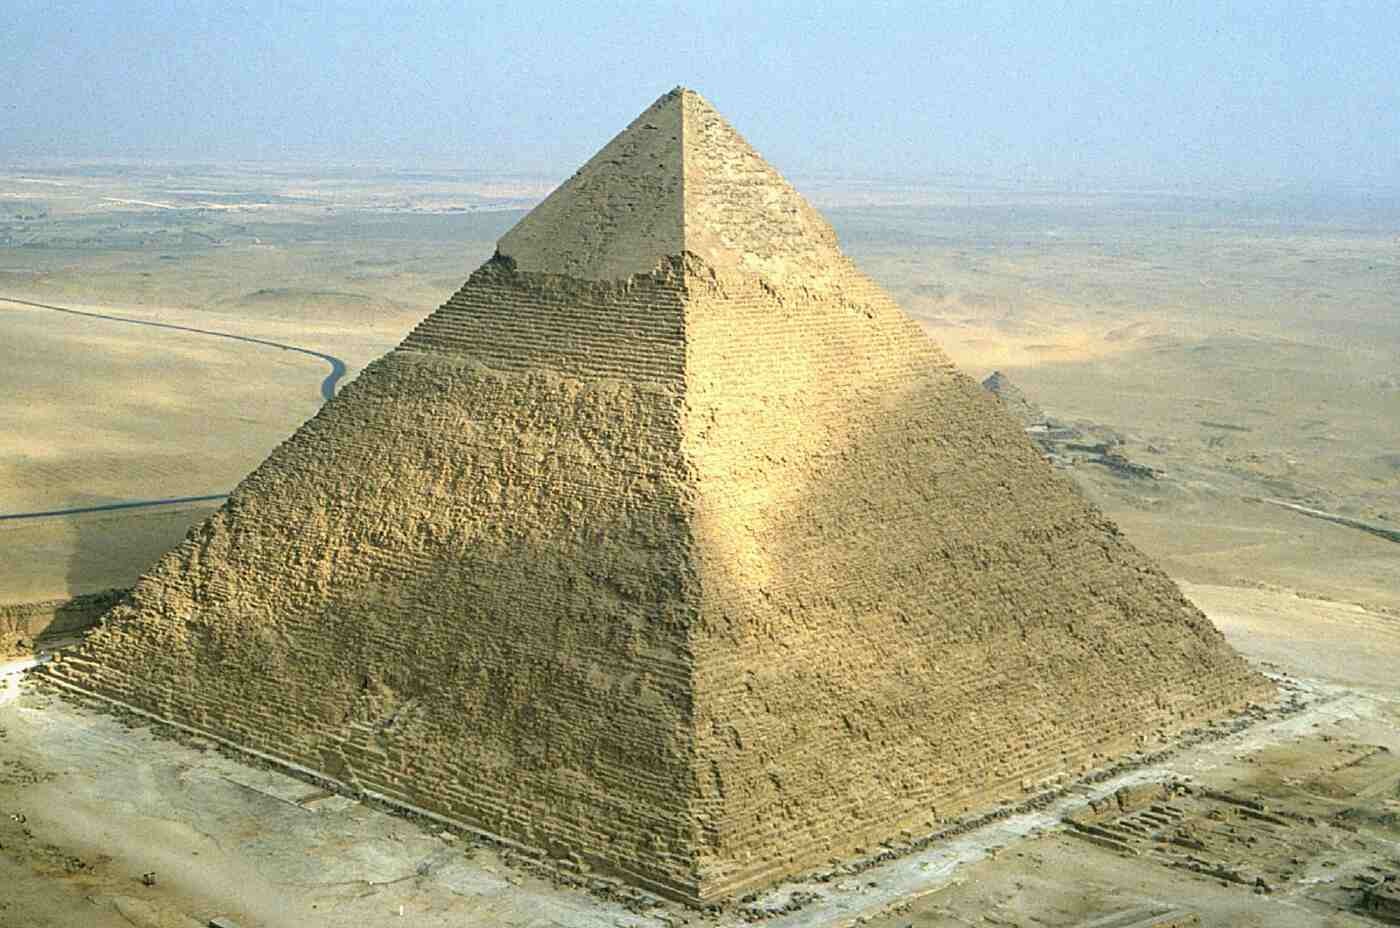 Khafre Pyramid of Giza complex